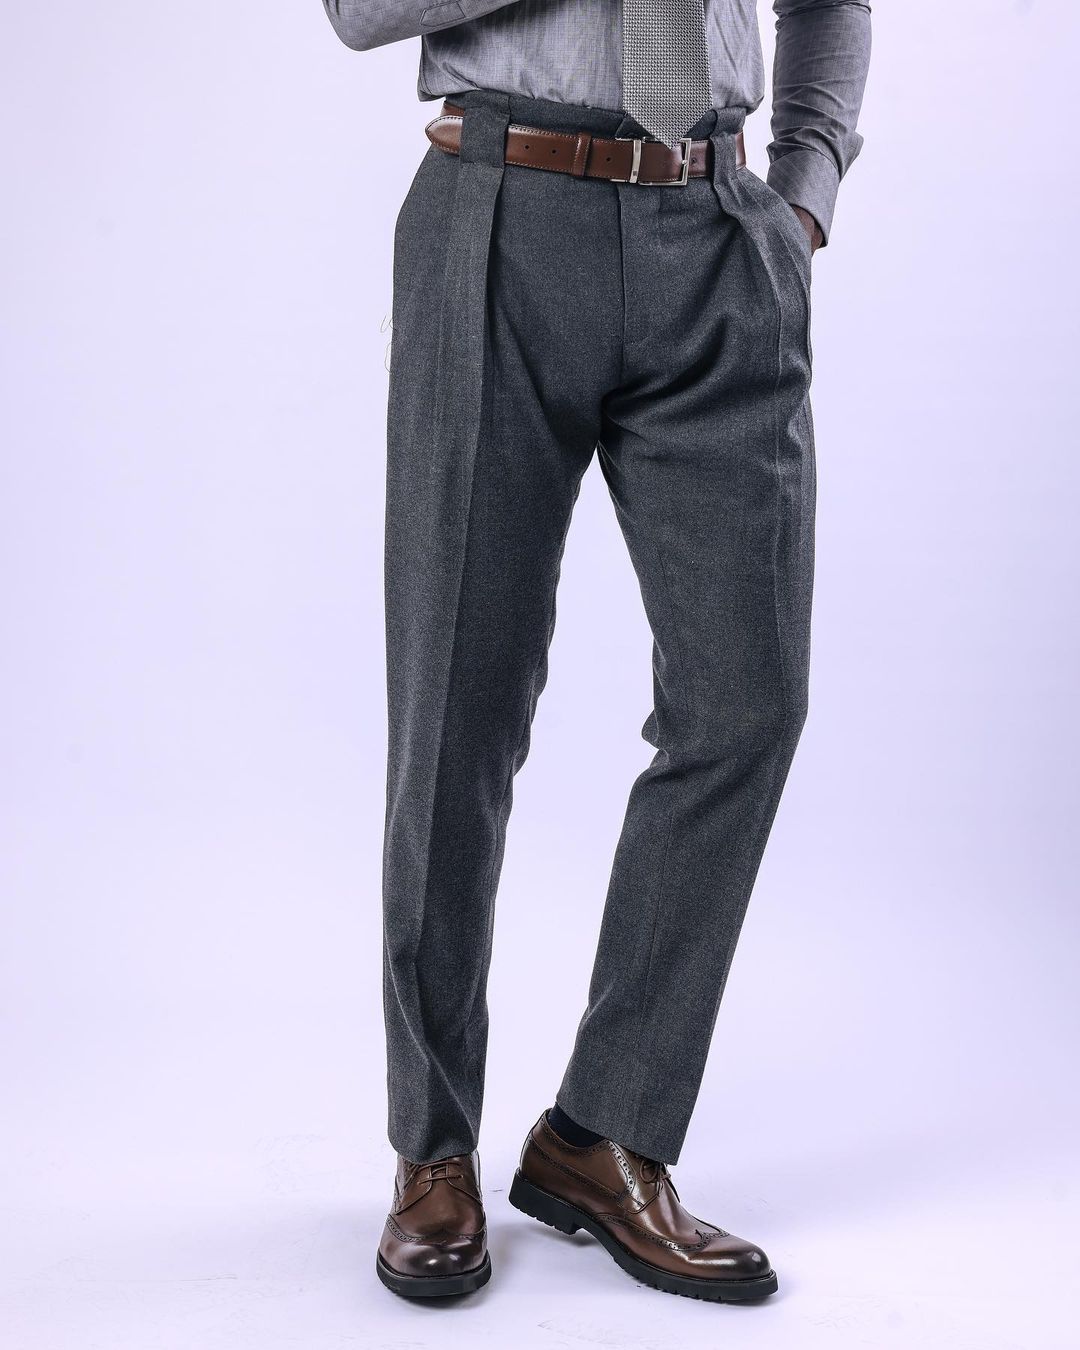 Shop Grey, Gurkha Pant with Double Pleats Trouser- Deji & kola